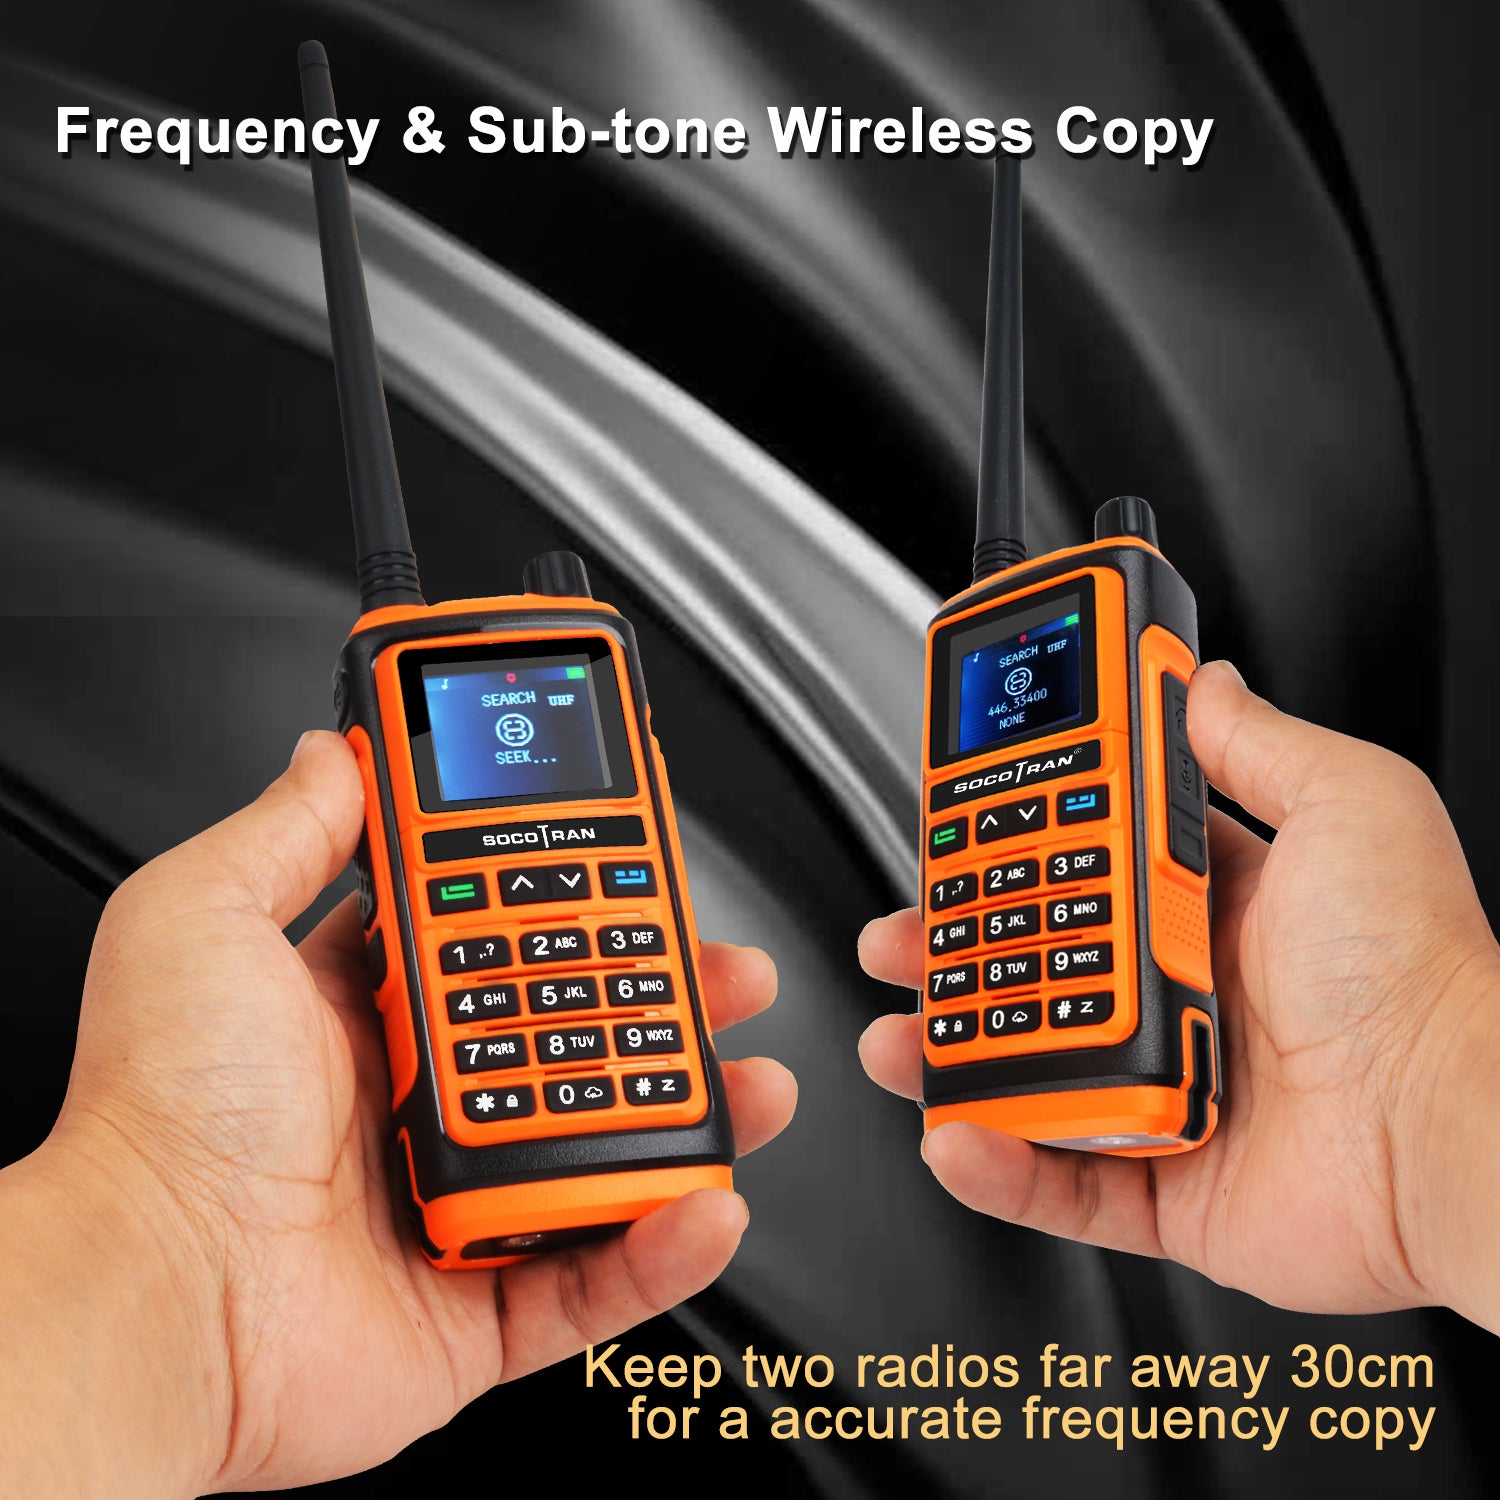 Talkie Walkie Baofeng UV 17 Pro Double Bande UHF VHF Portable